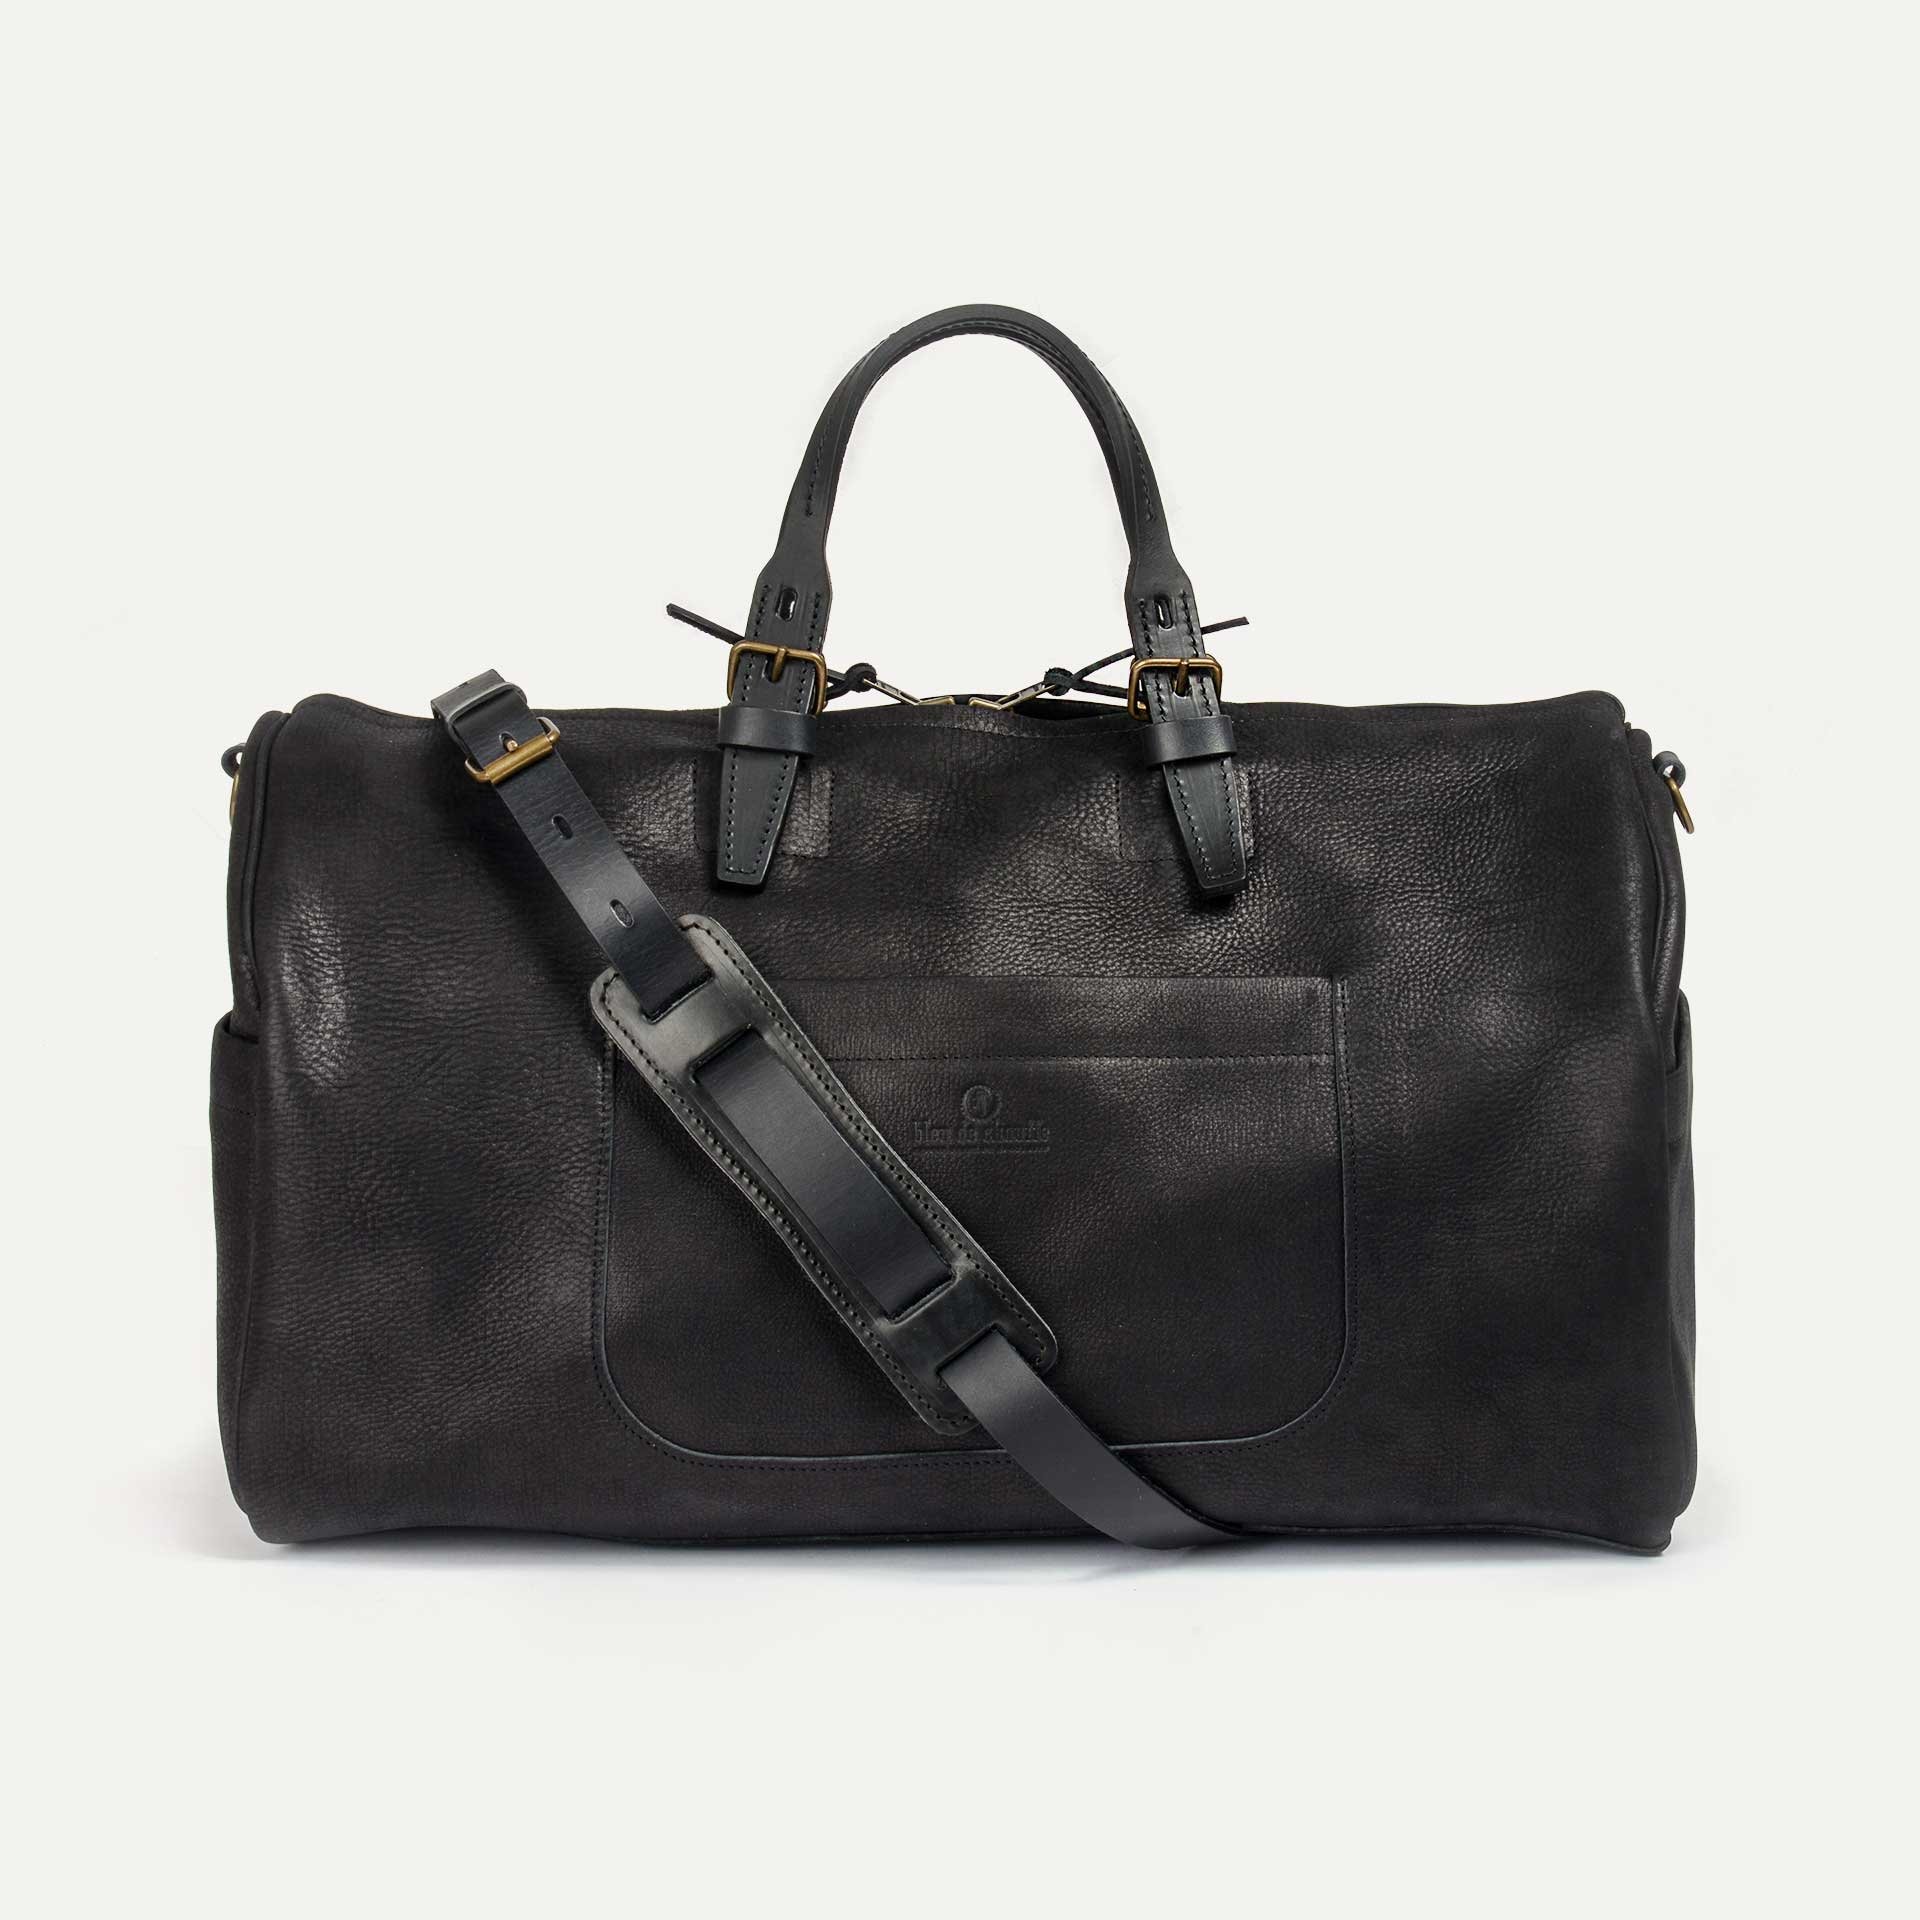 Hobo Travel bag - Charcoal black / Waxed Leather (image n°1)